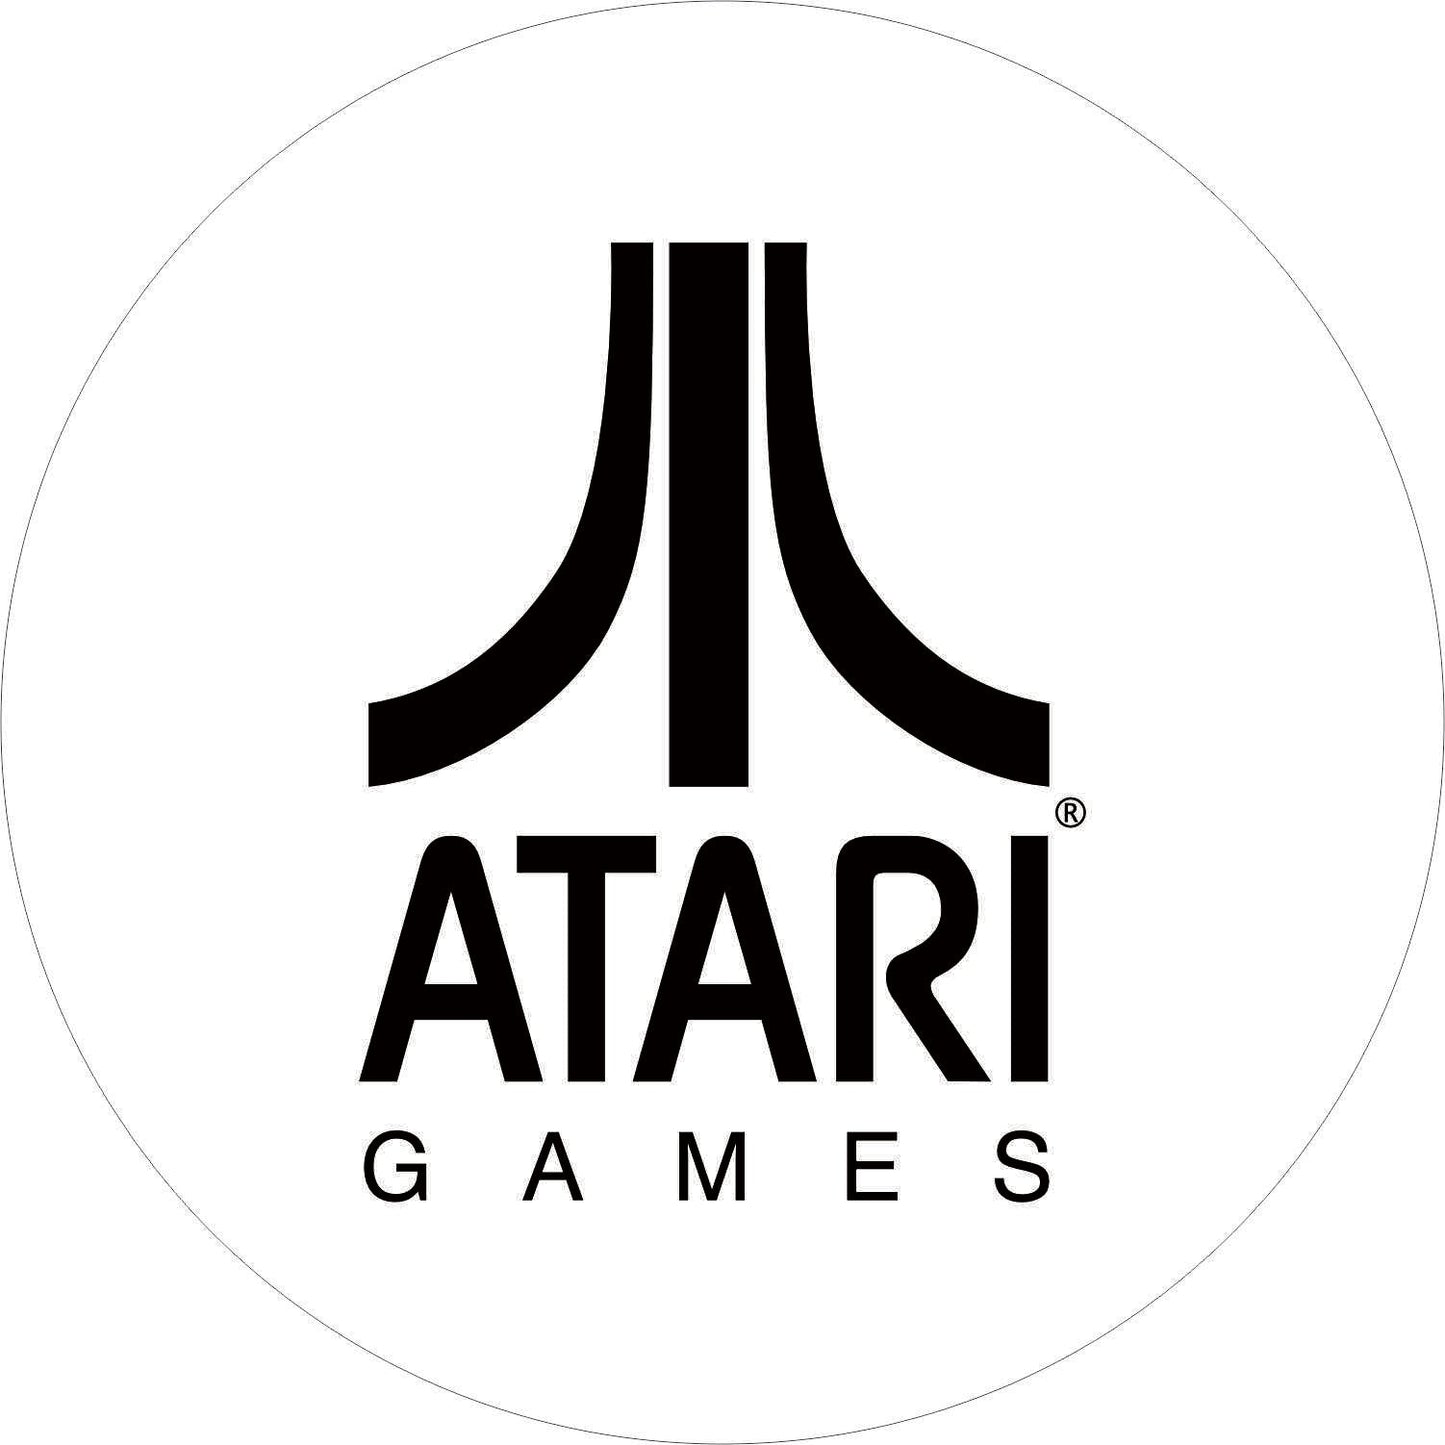 095-Single-sided illuminated sign - Atari